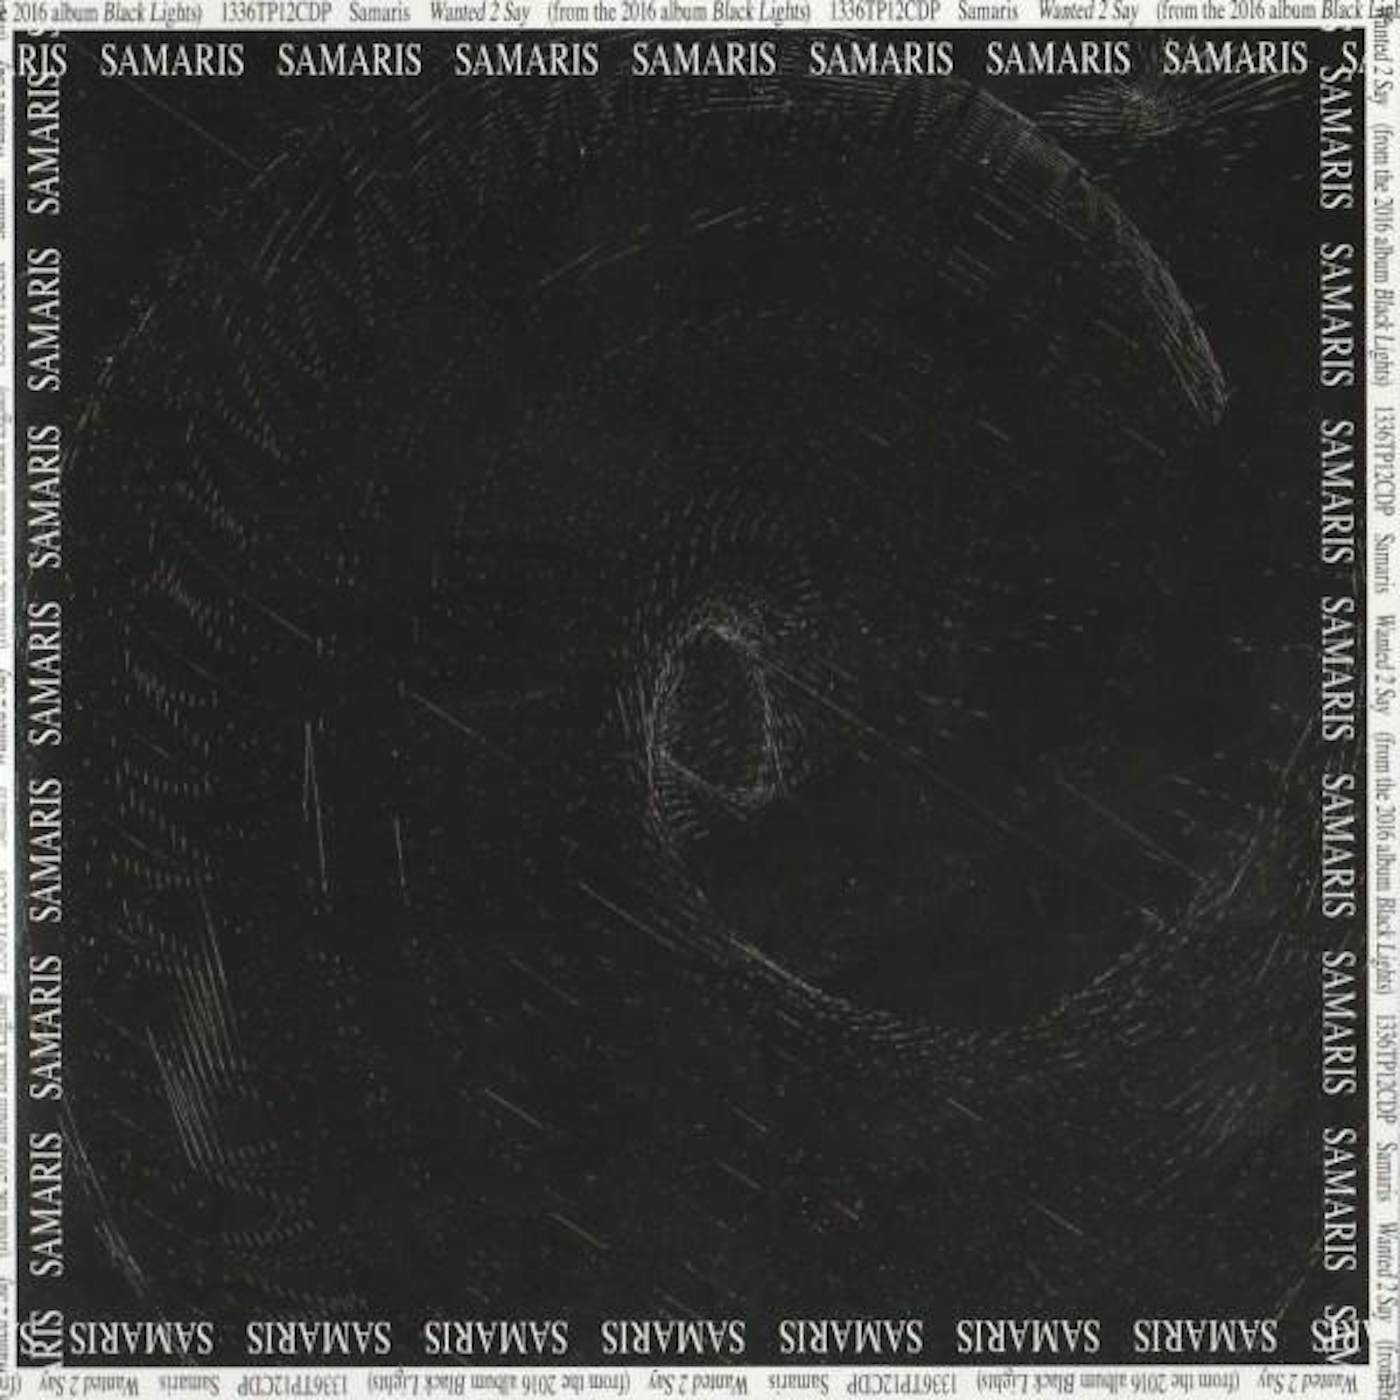 Samaris WANTED 2 SAY Vinyl Record - UK Release